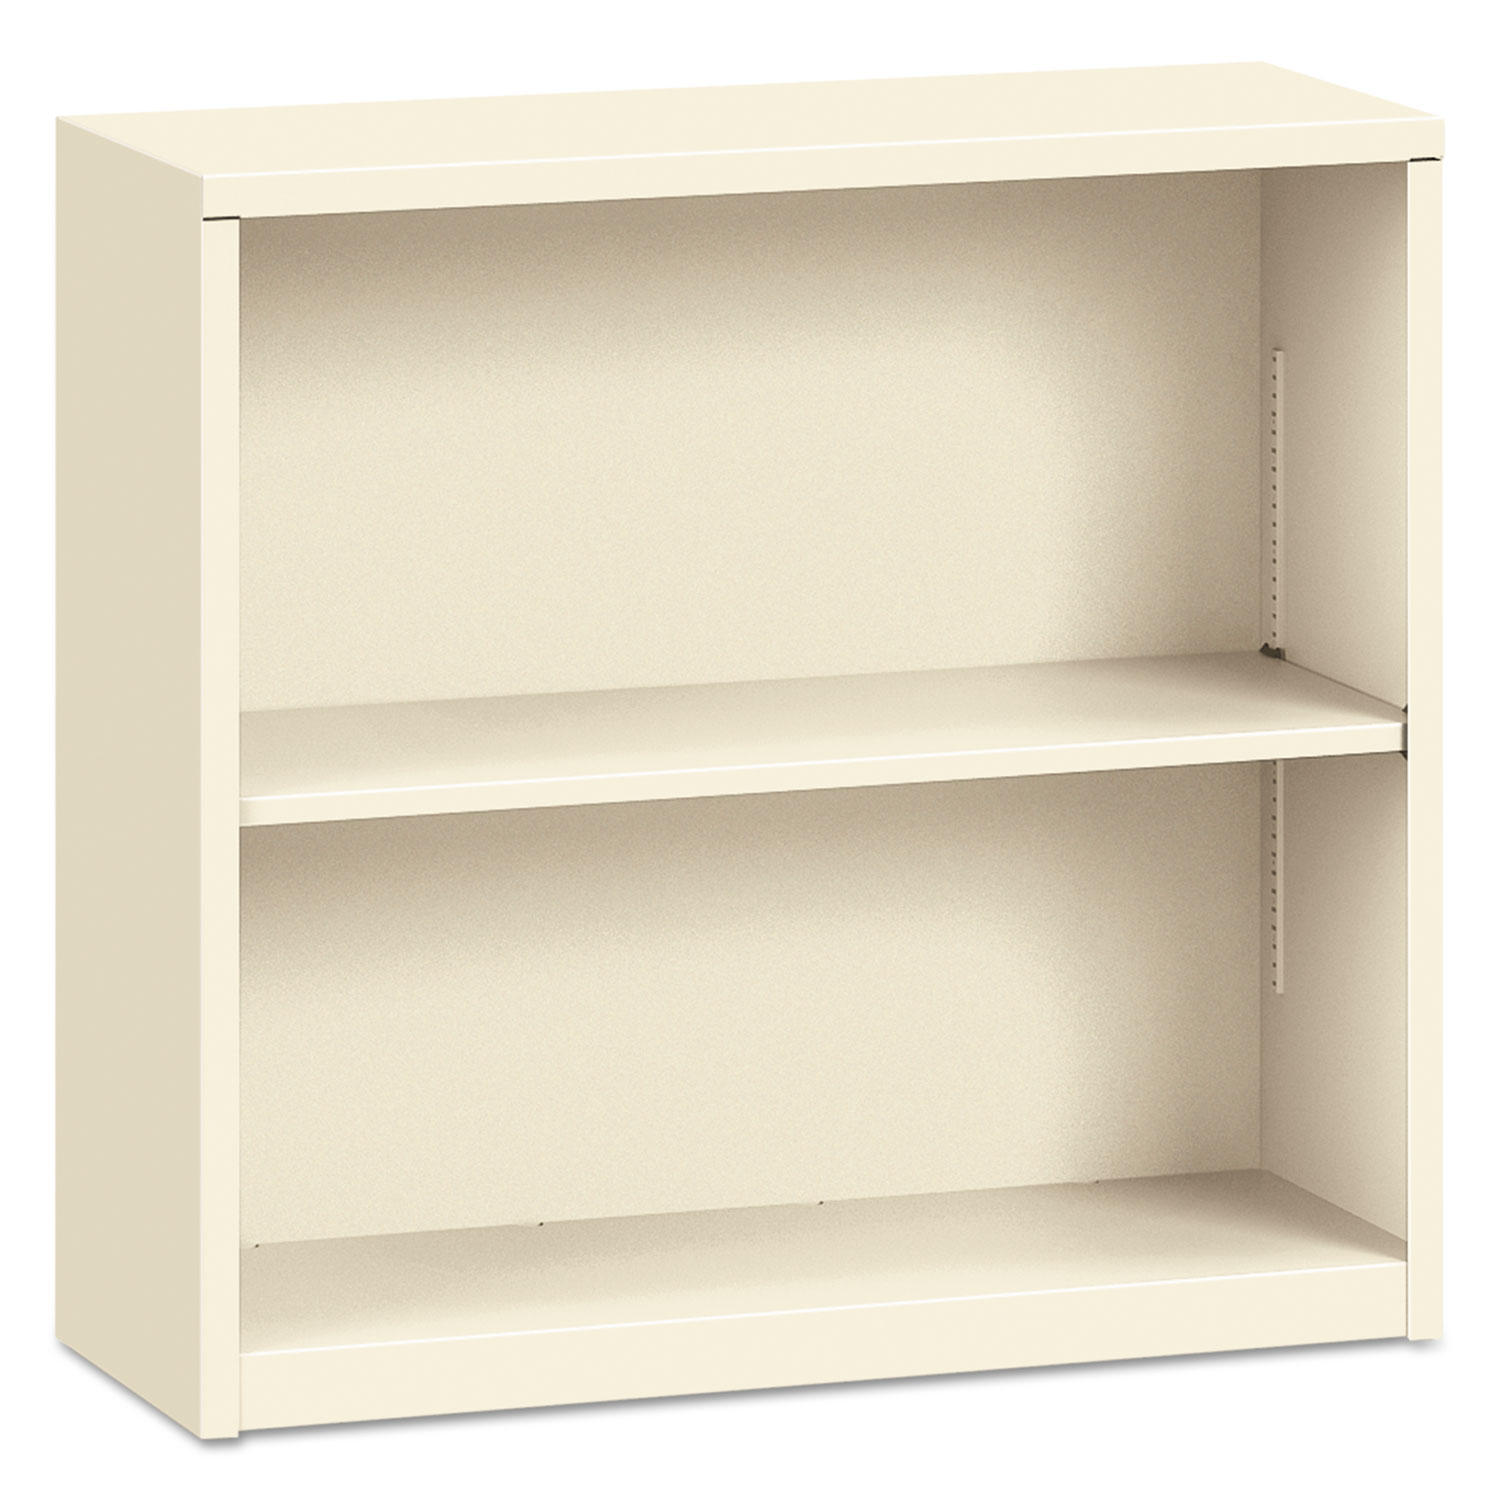 Metal Bookcase, Two-Shelf, 34-1/2w x 12-5/8d x 29h, Putty